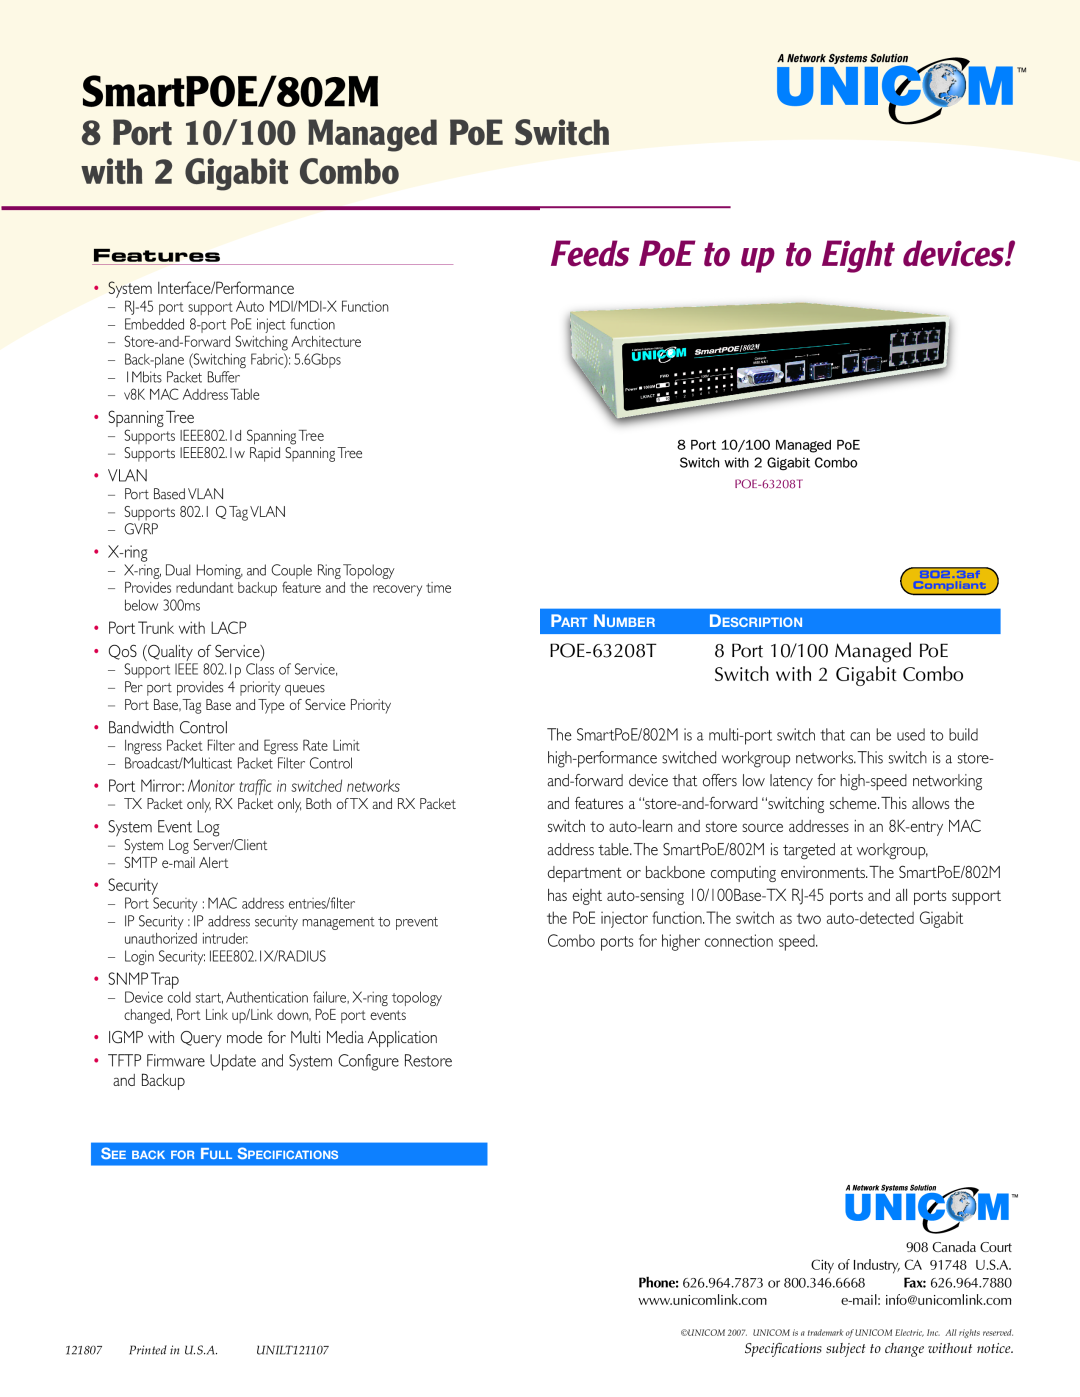 UNICOM Electric SmartPoE/802M specifications SmartPOE/802M, Port 10/100 Managed PoE Switch with 2 Gigabit Combo, Features 